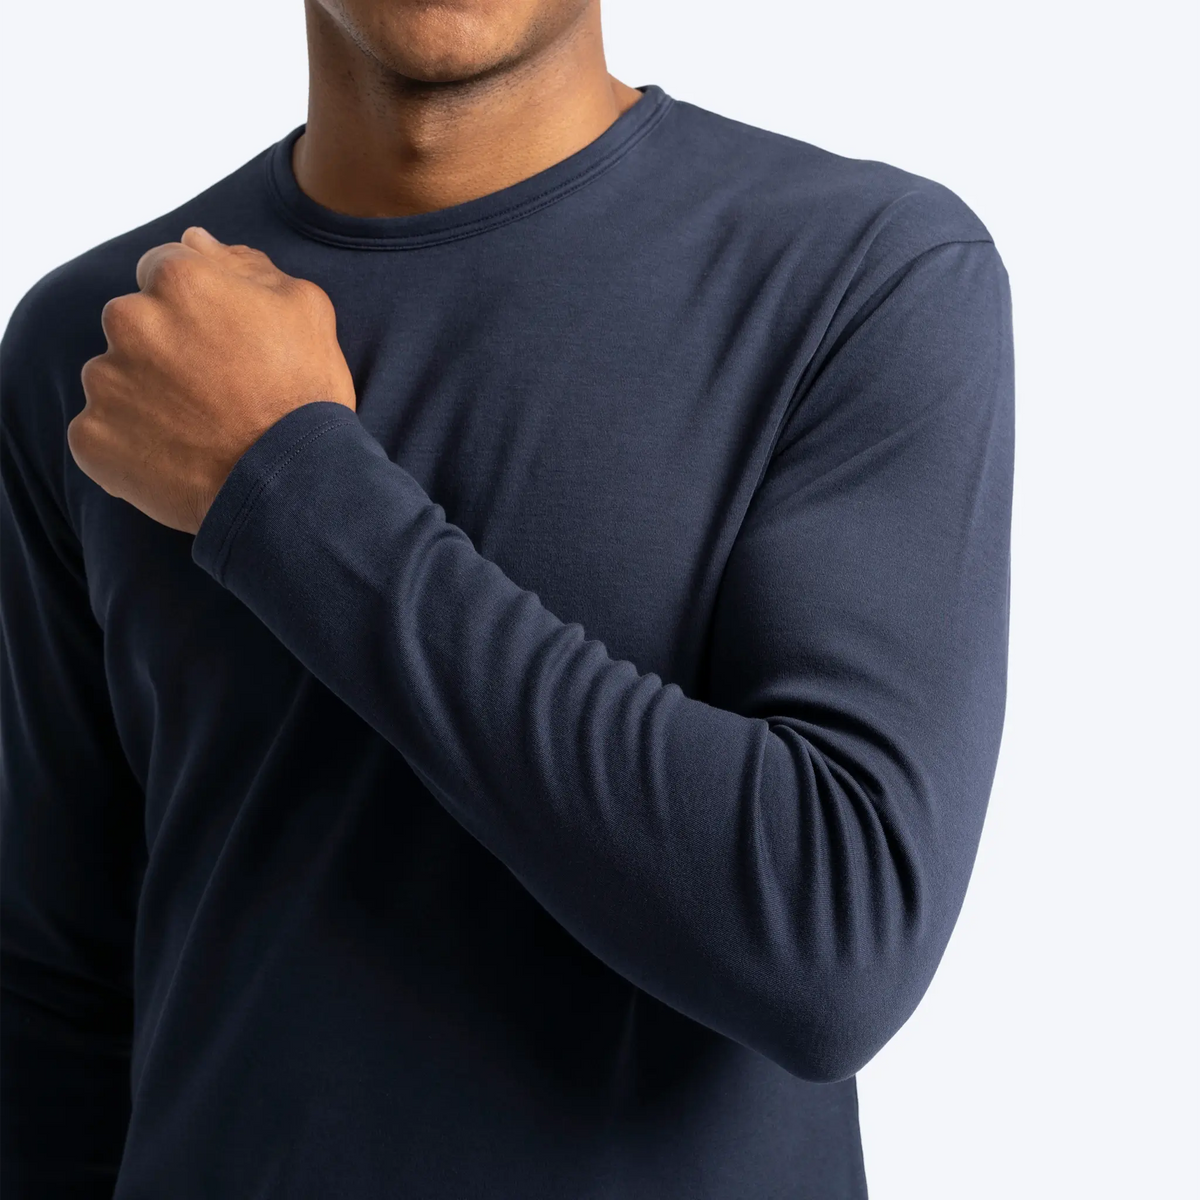 mens comfortable tshirt long sleeve color navy blue